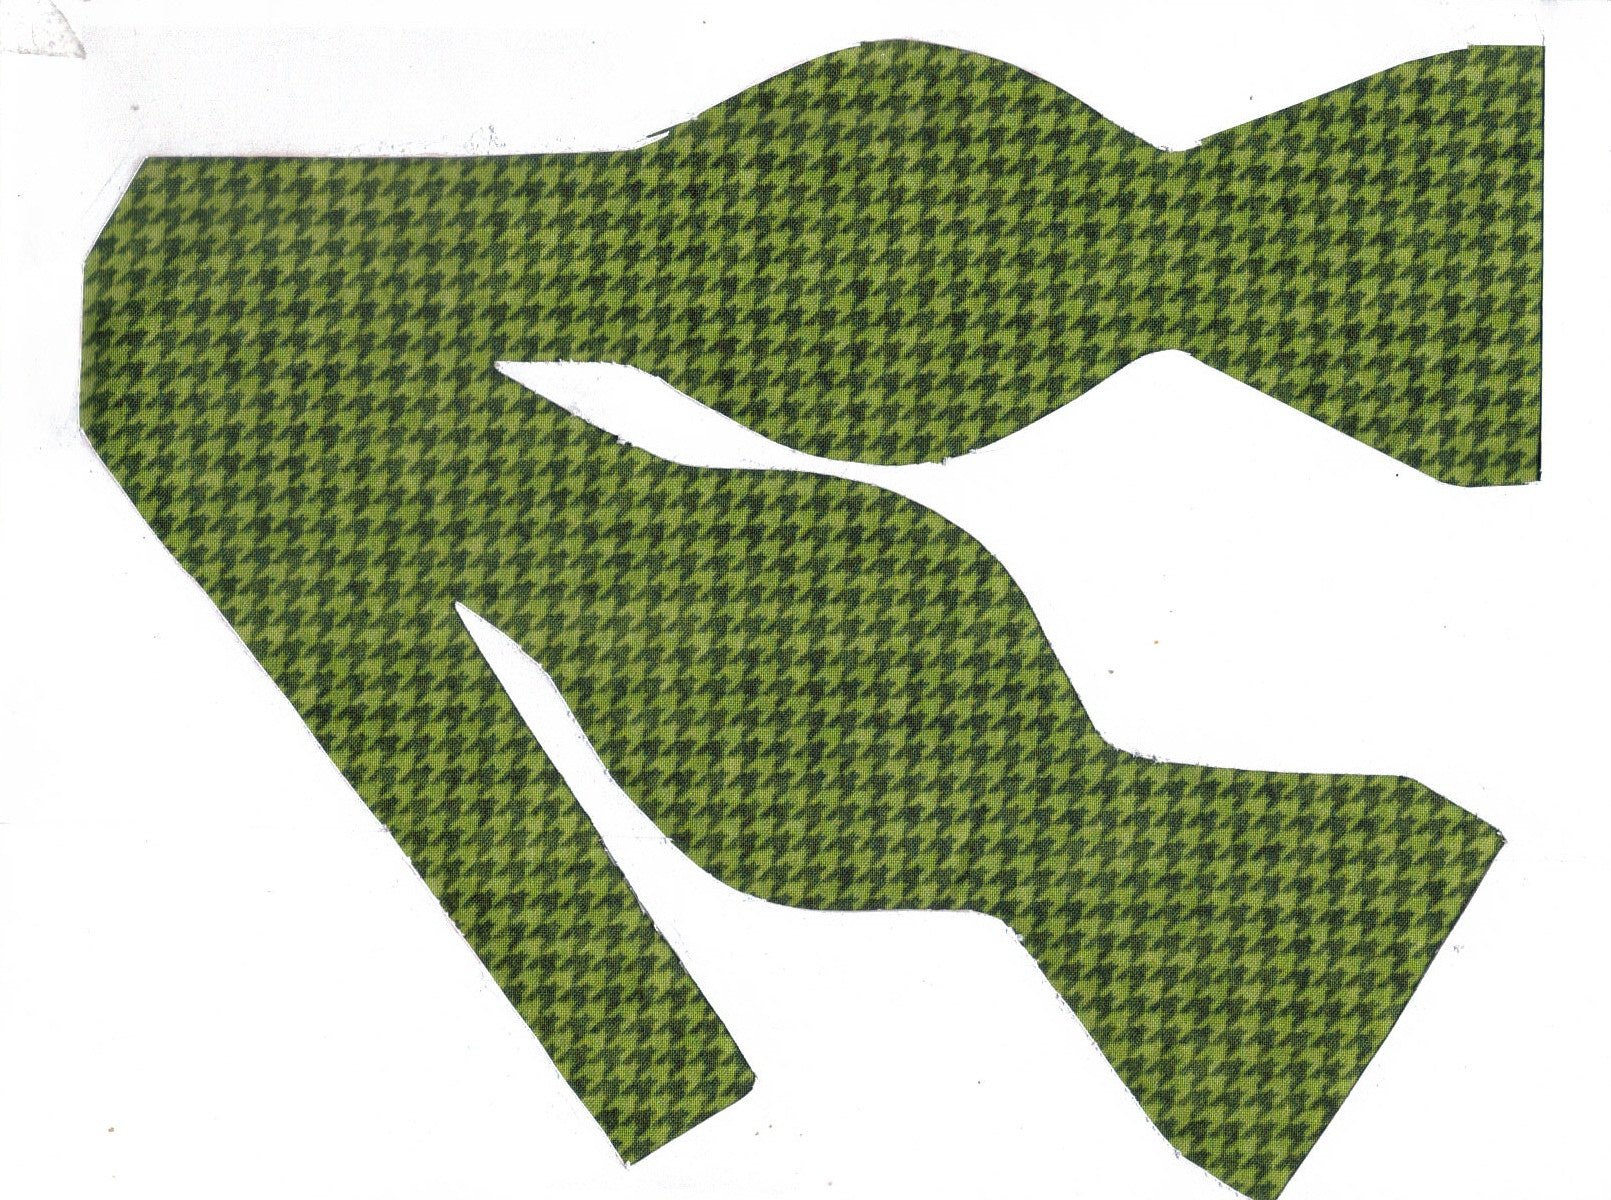 light green bow clipart